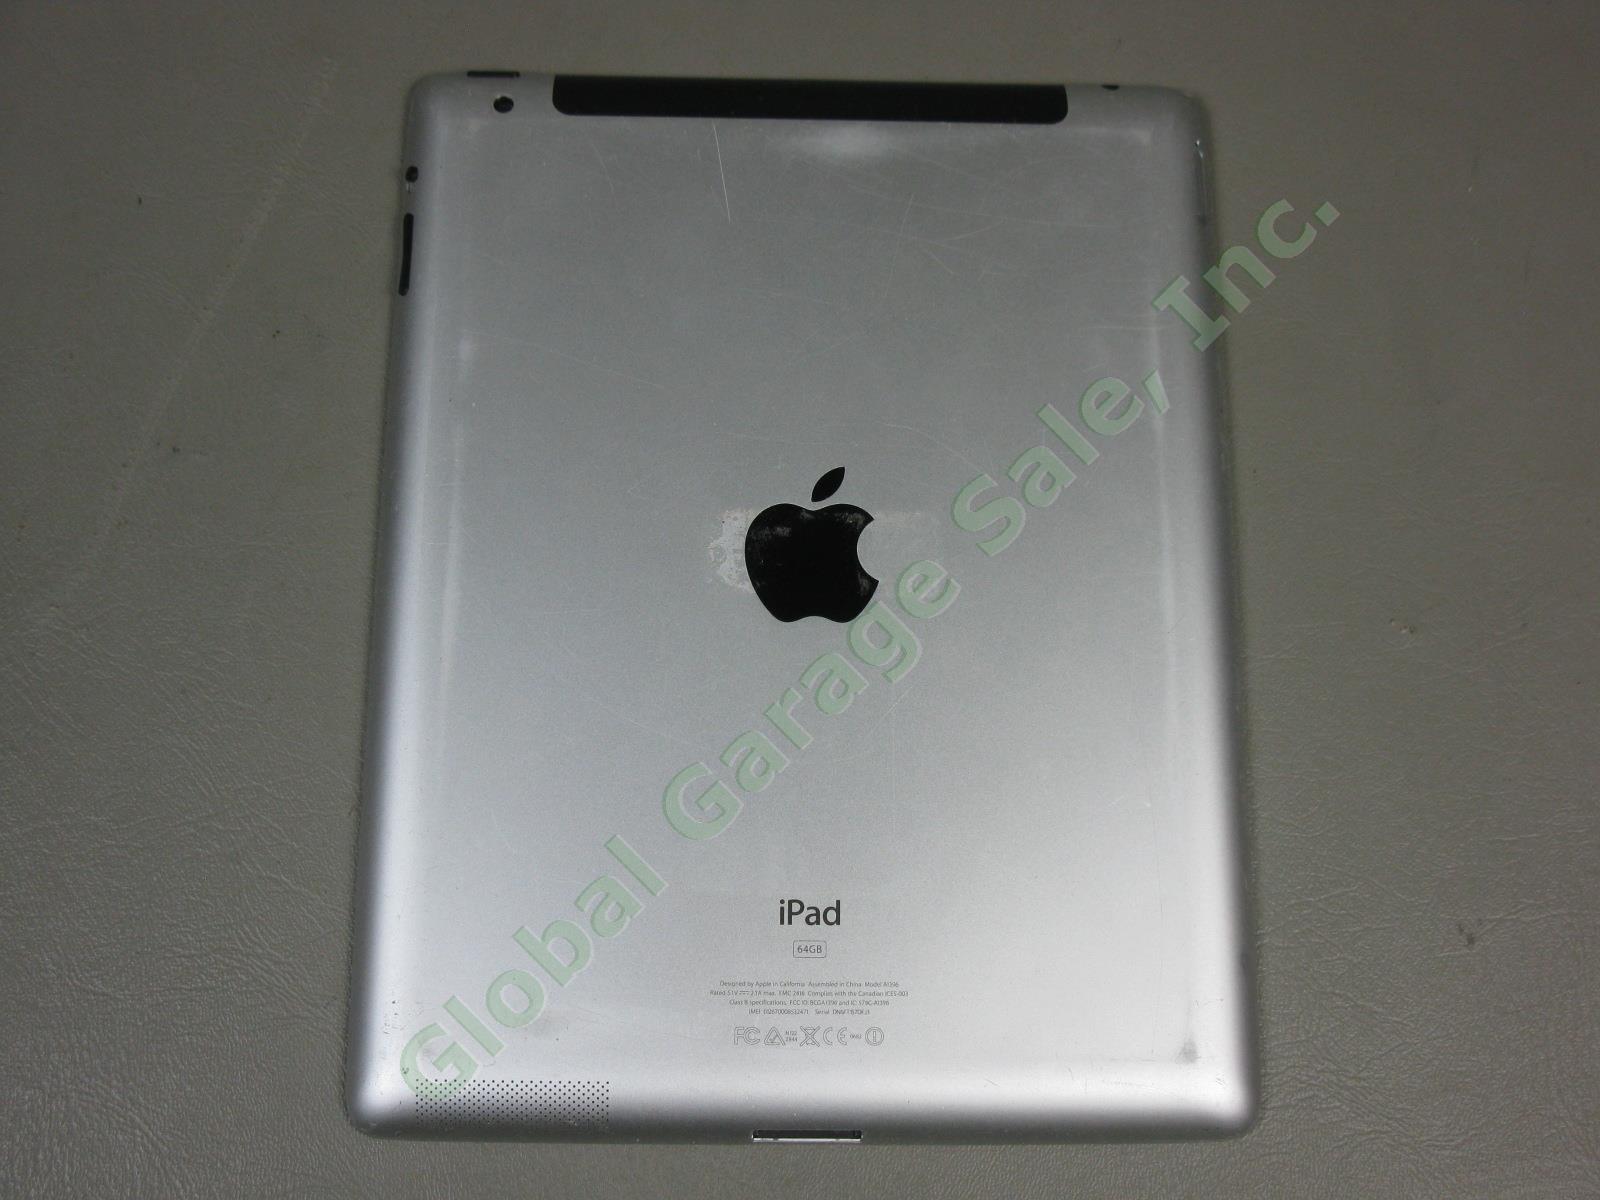 iPad 2 2nd Gen A1396 MC775LL/A Wi-Fi ATT 3G Tablet 64GB 1 Owner Works Great NR! 4